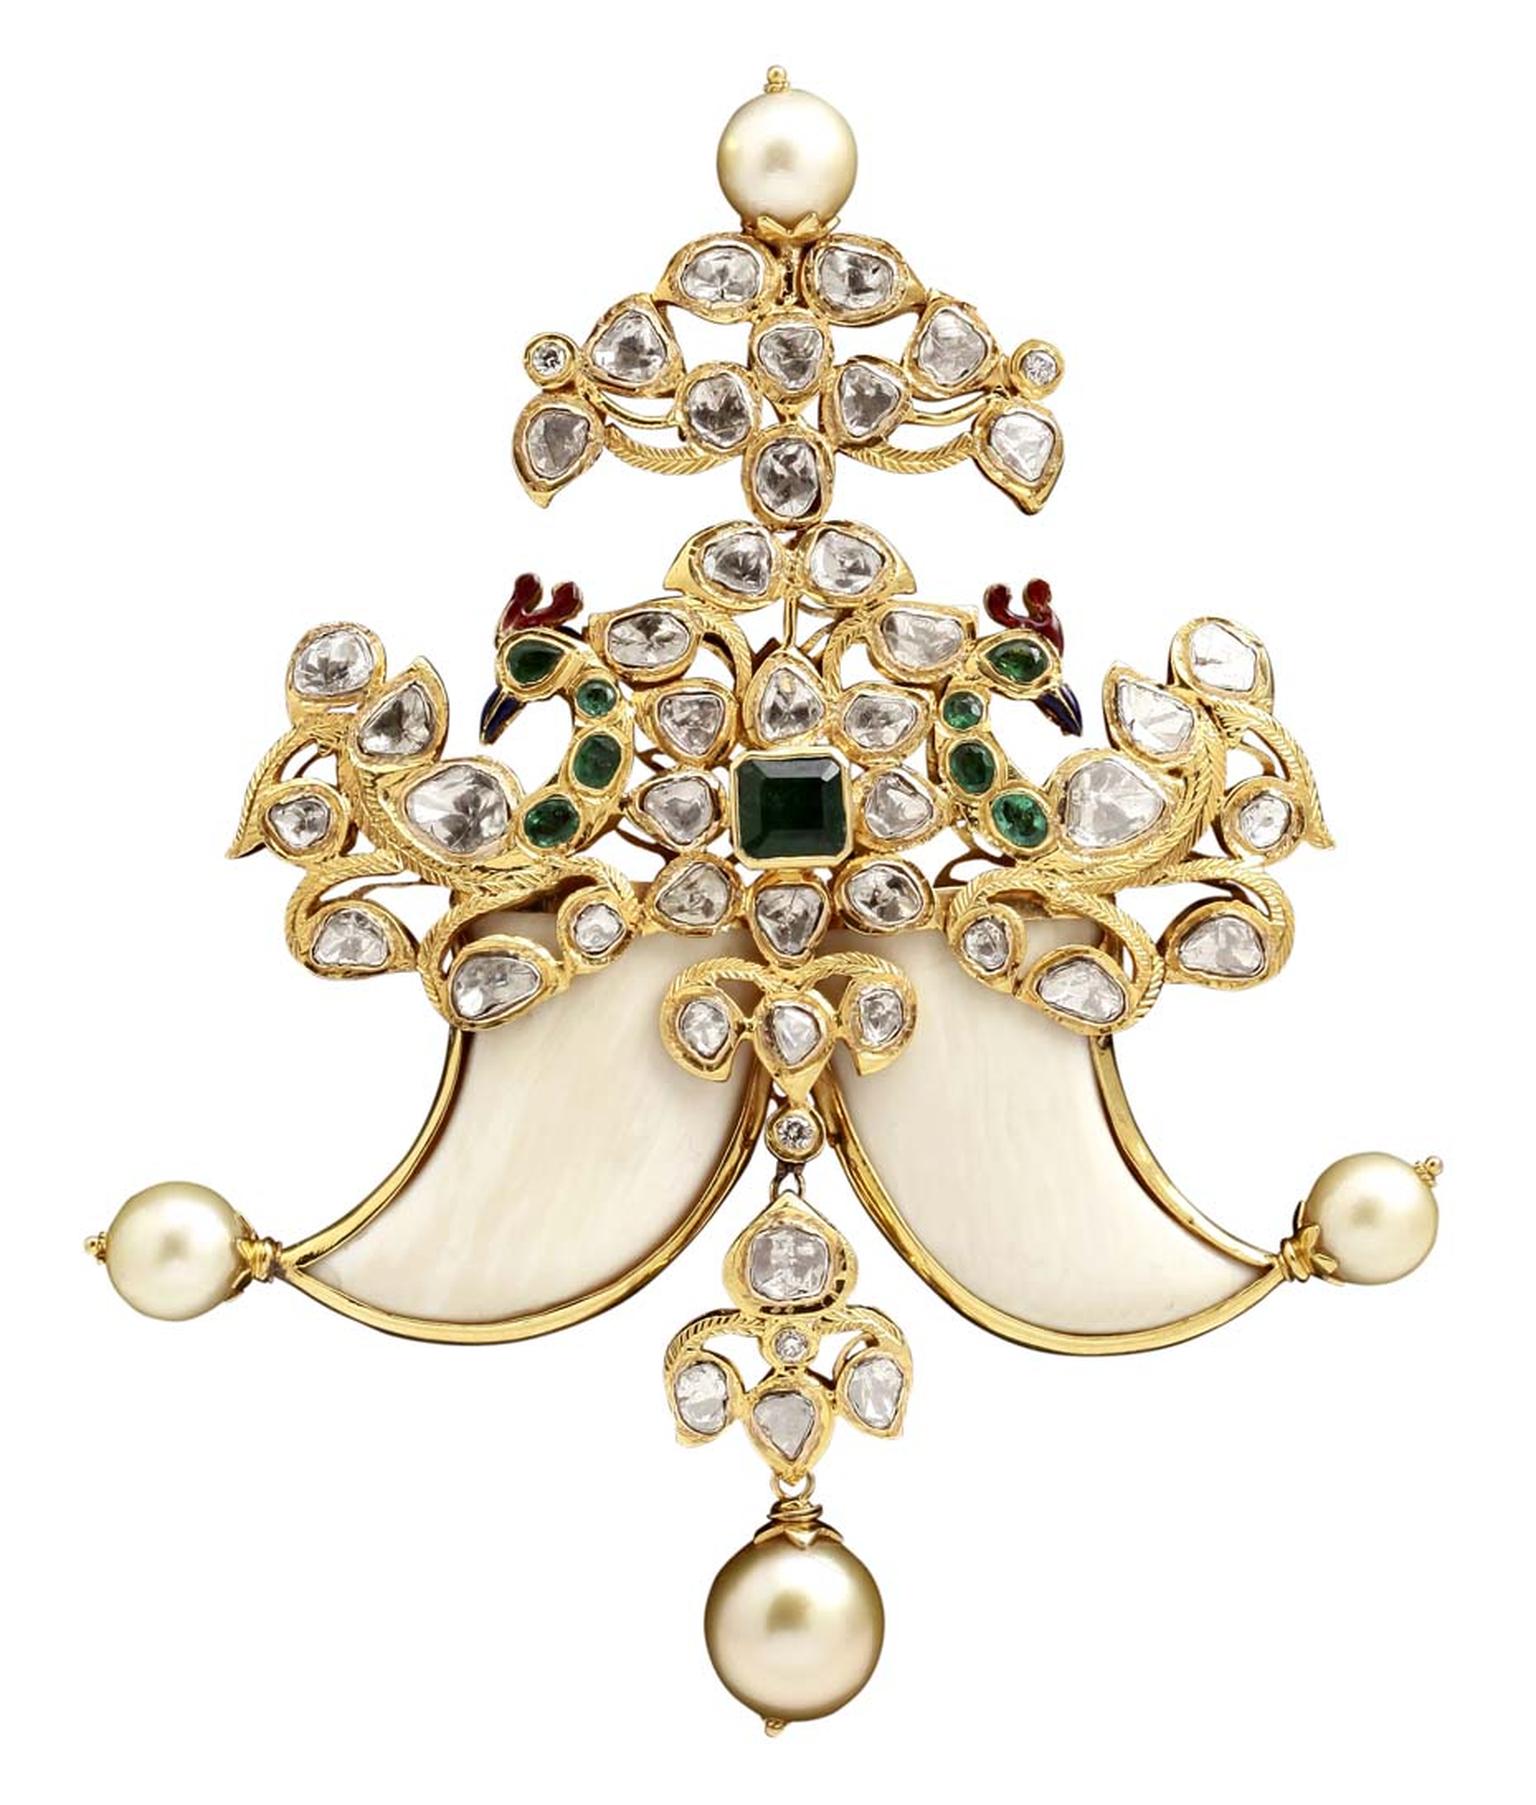 Peacock brooch by Sunita Shekhawat with diamonds, rubies, emeralds, onyx and pearls.